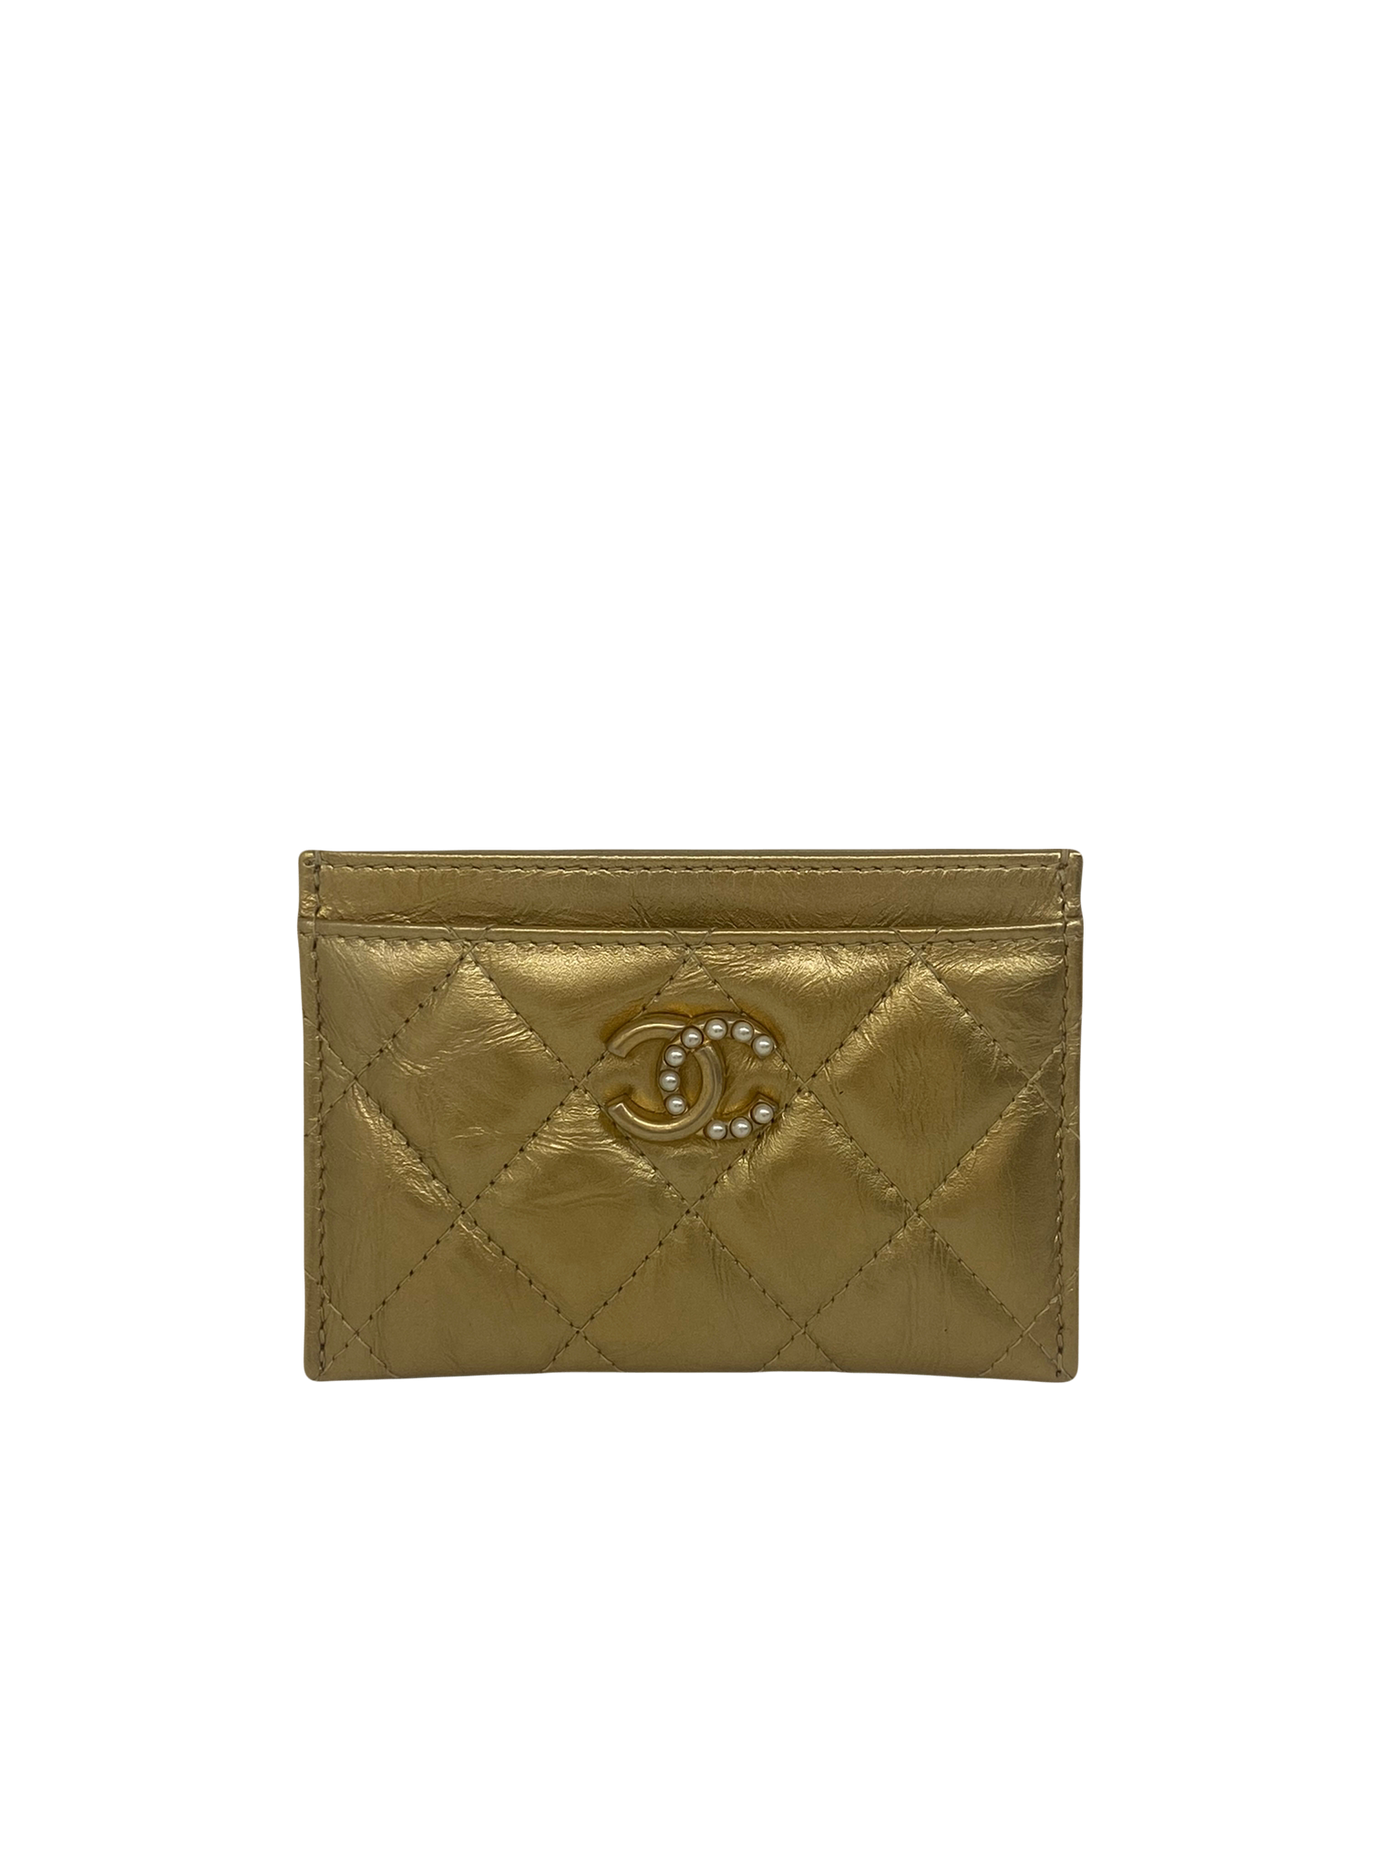 Chanel Card Holder Gold - SOLD